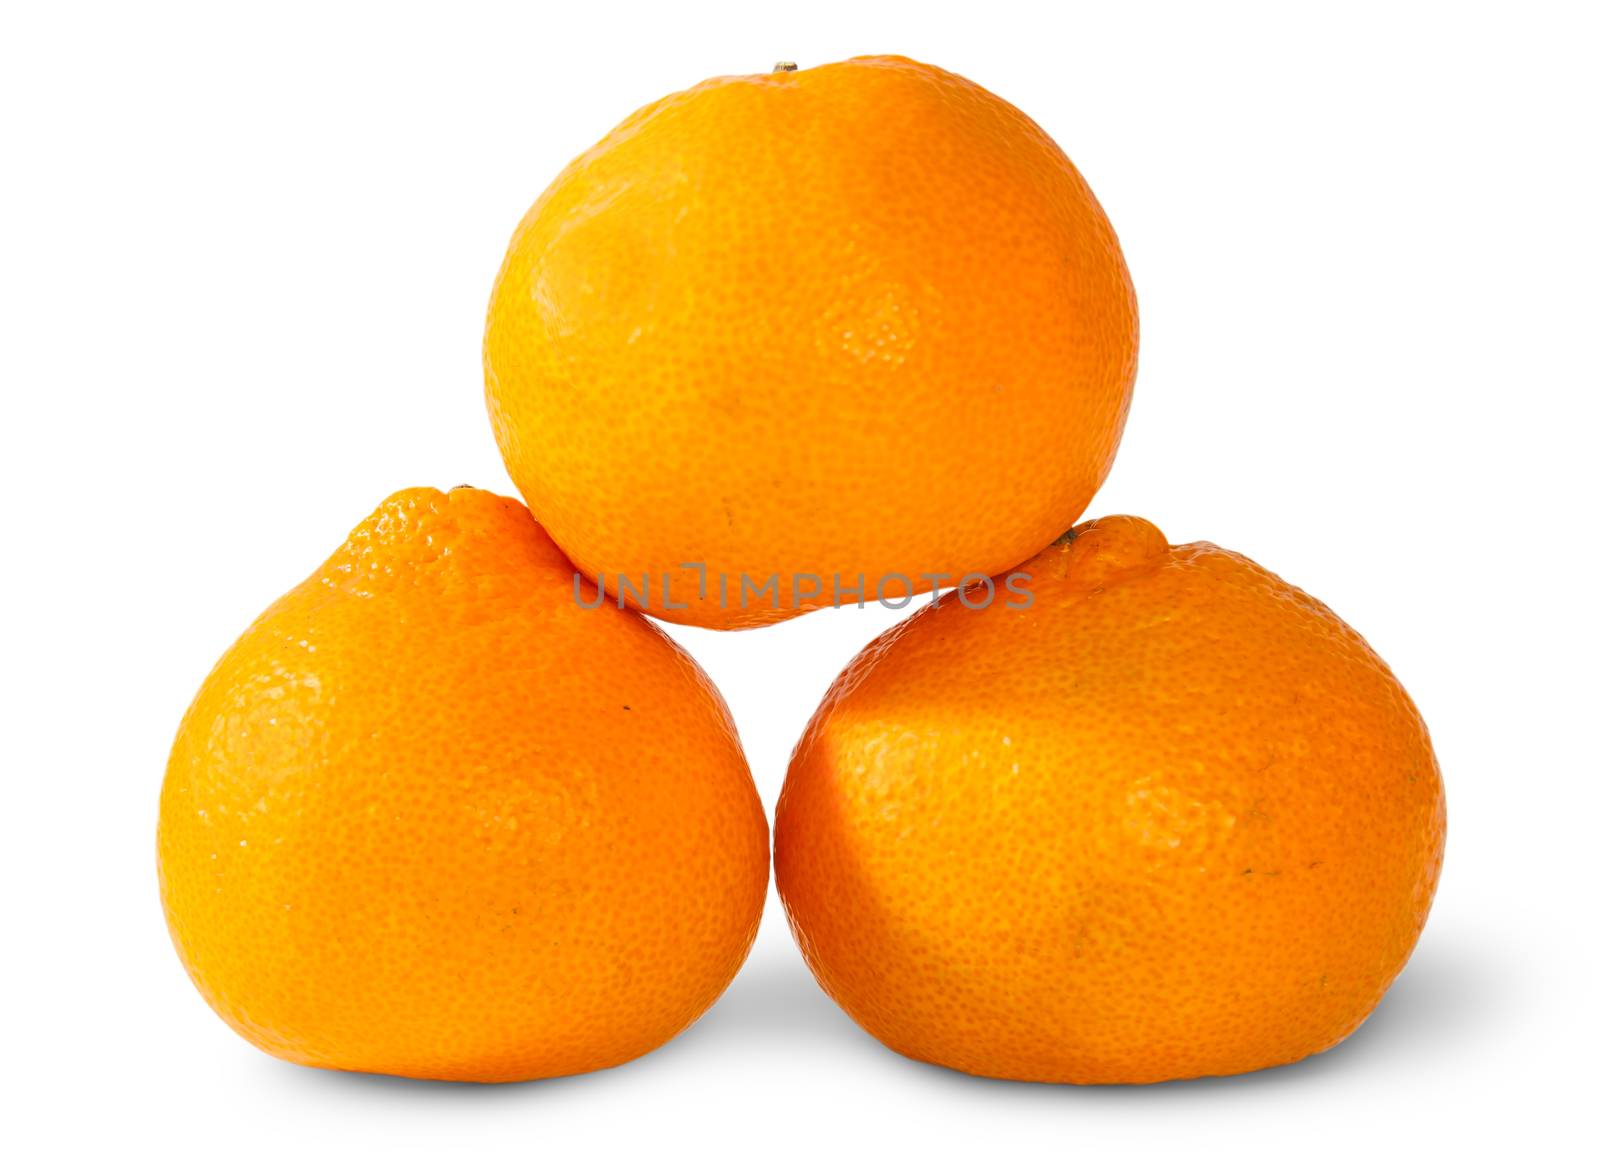 Pyramid Of Three Ripe Tangerines by Cipariss